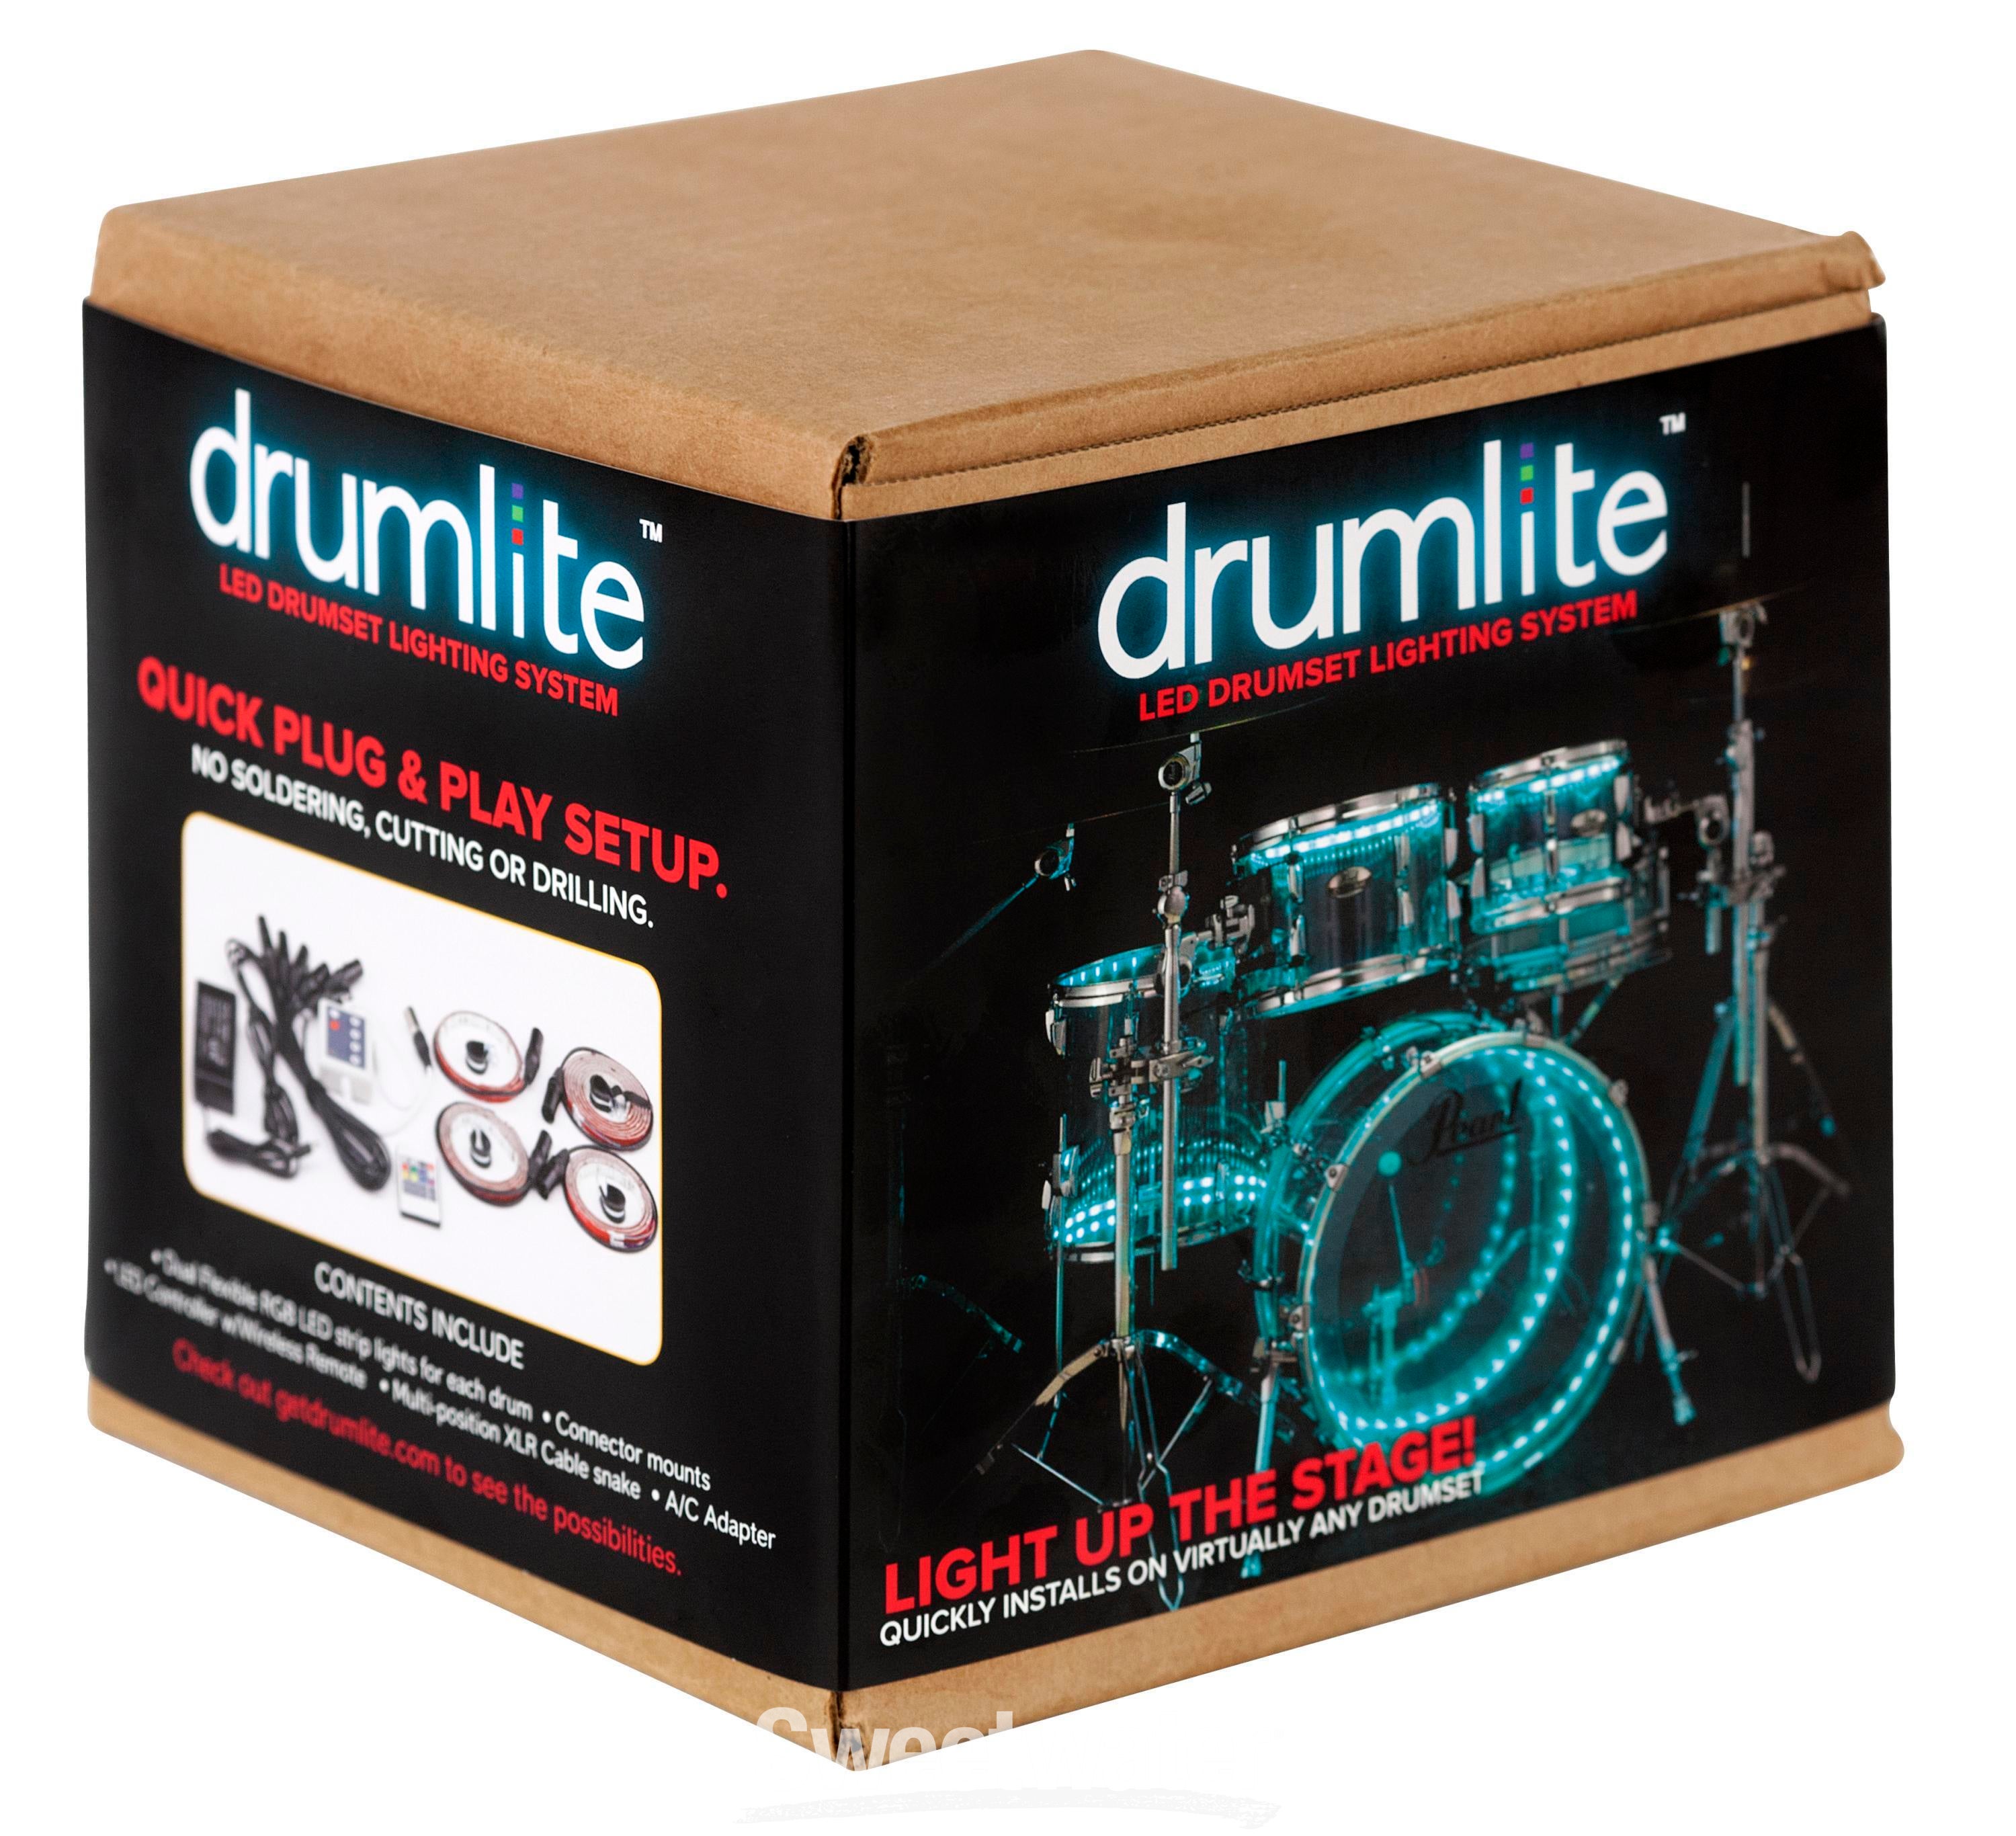 Drumlite Dual-band LED Lighting Kit for 4-piece Drum Set 22